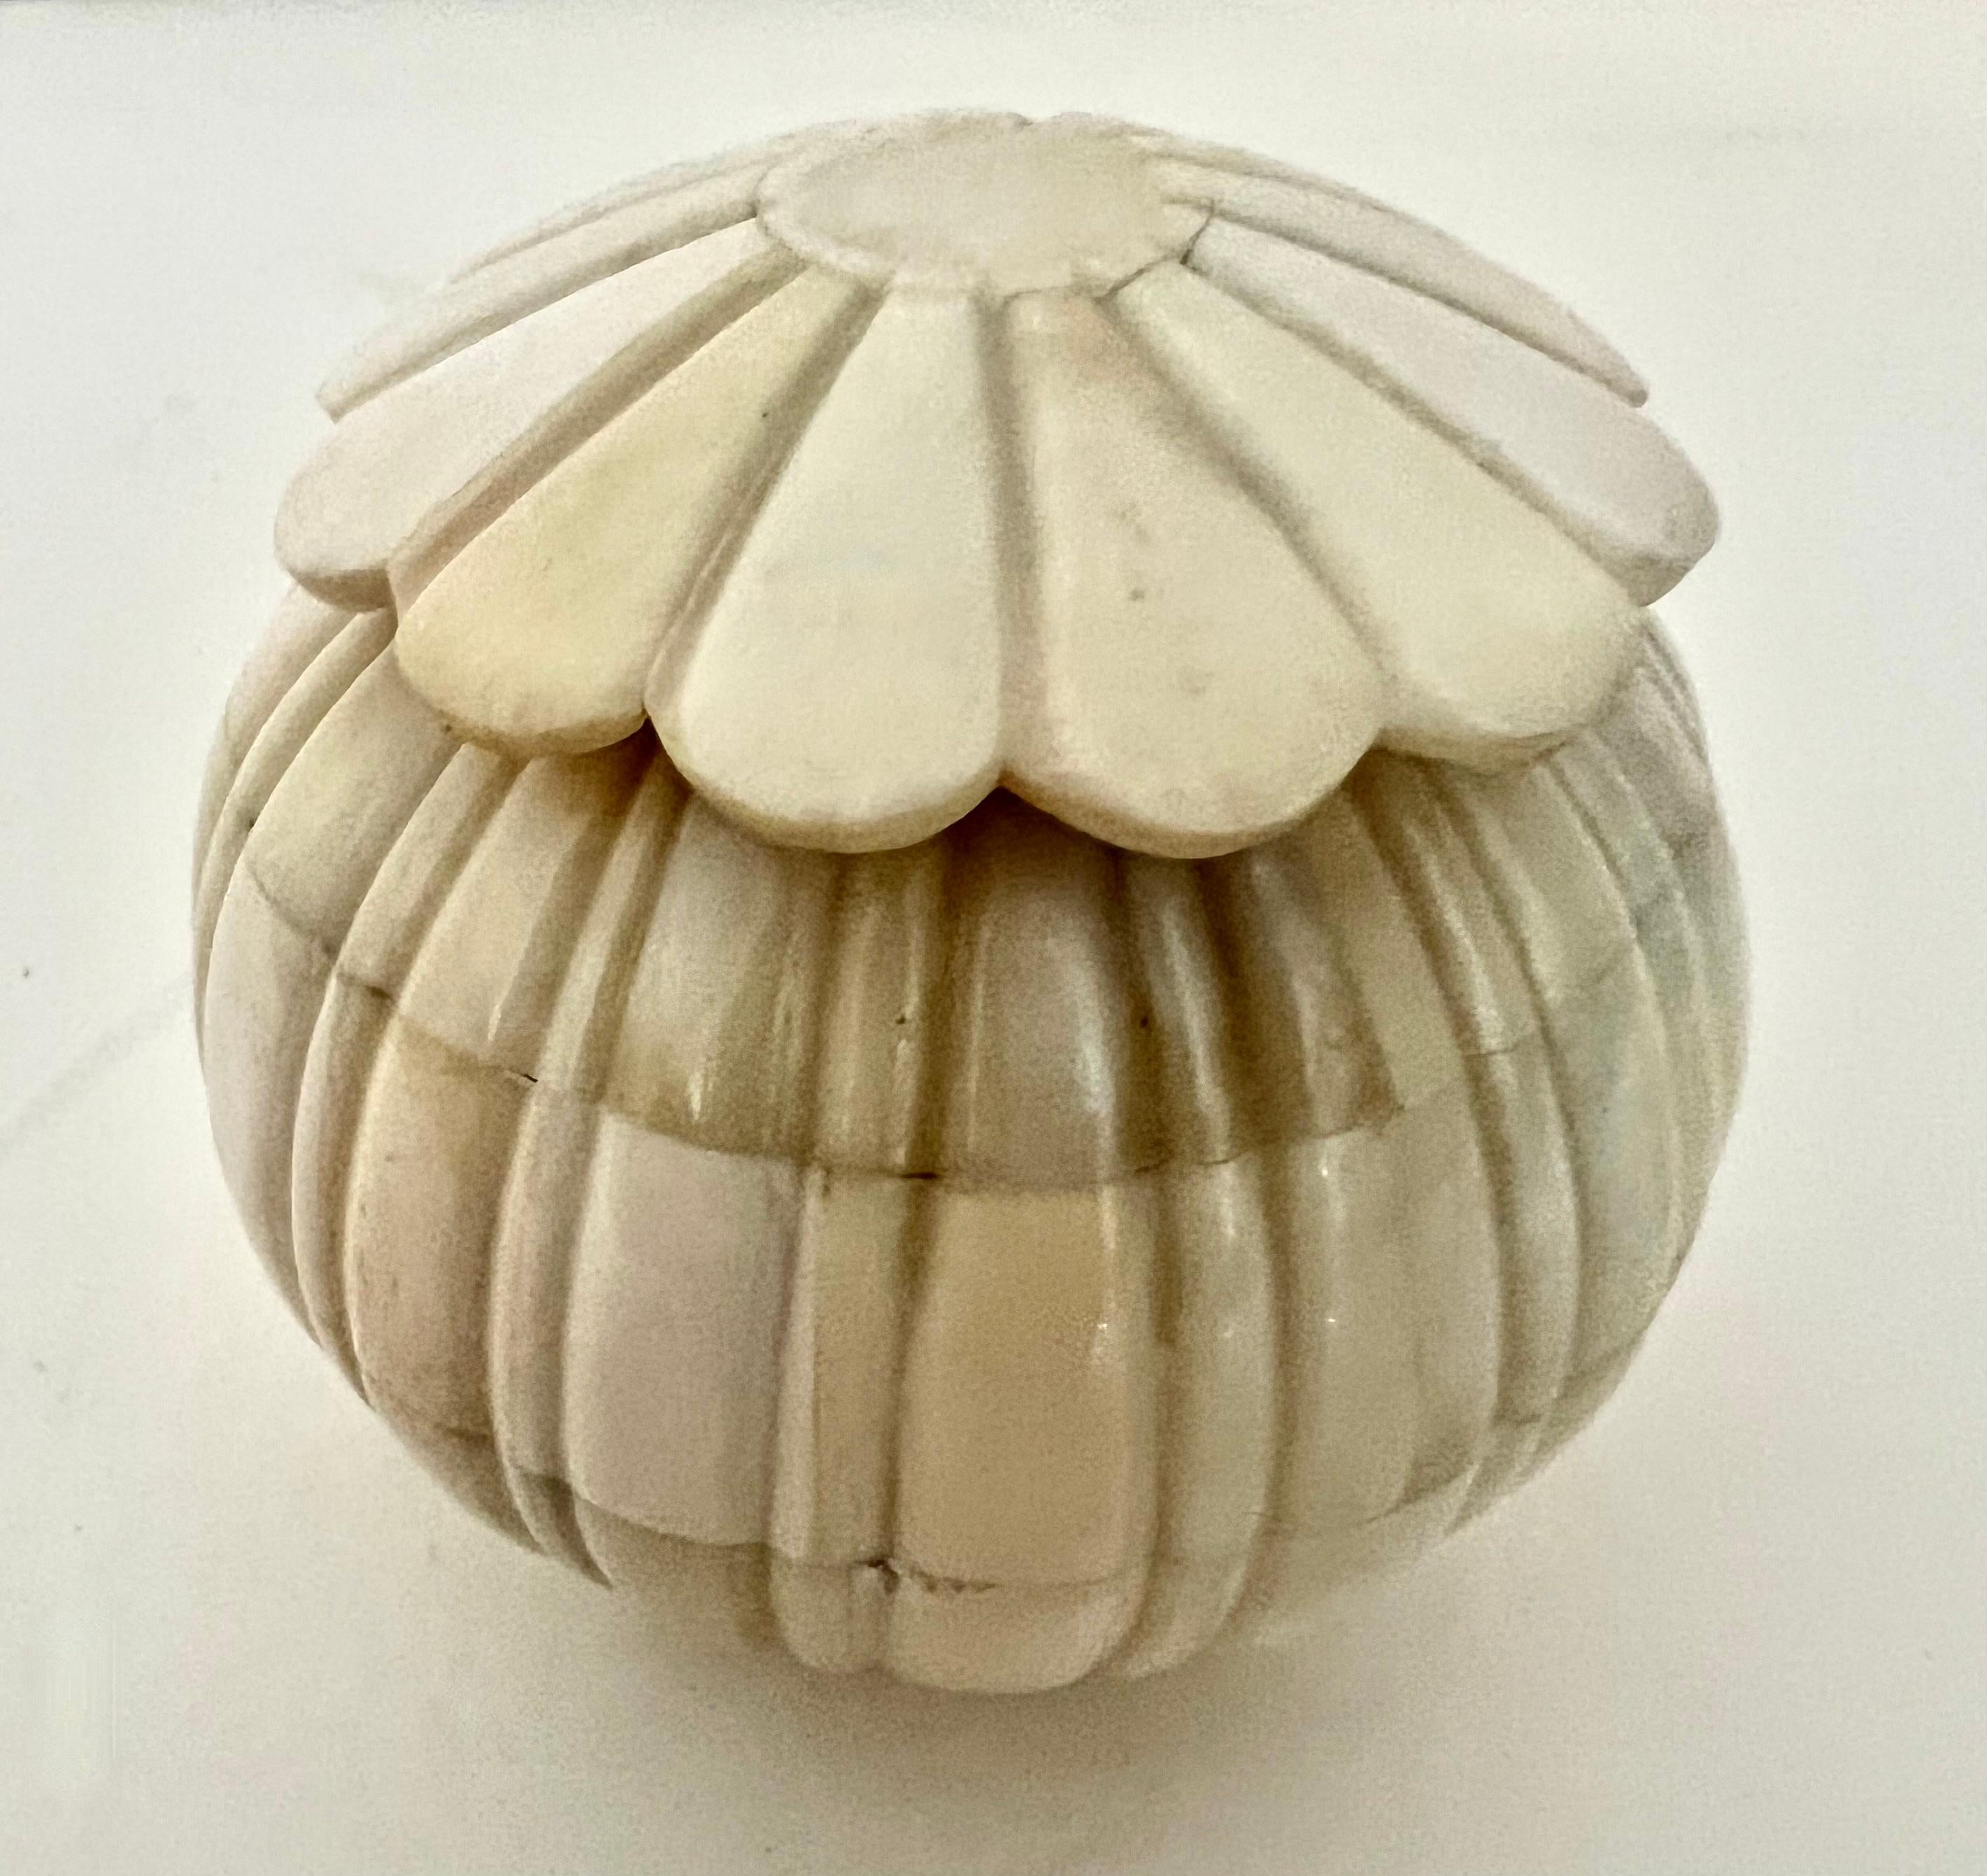 Hand-Carved Round Lidded Bone Box with Spherical Fruit Like Ridges